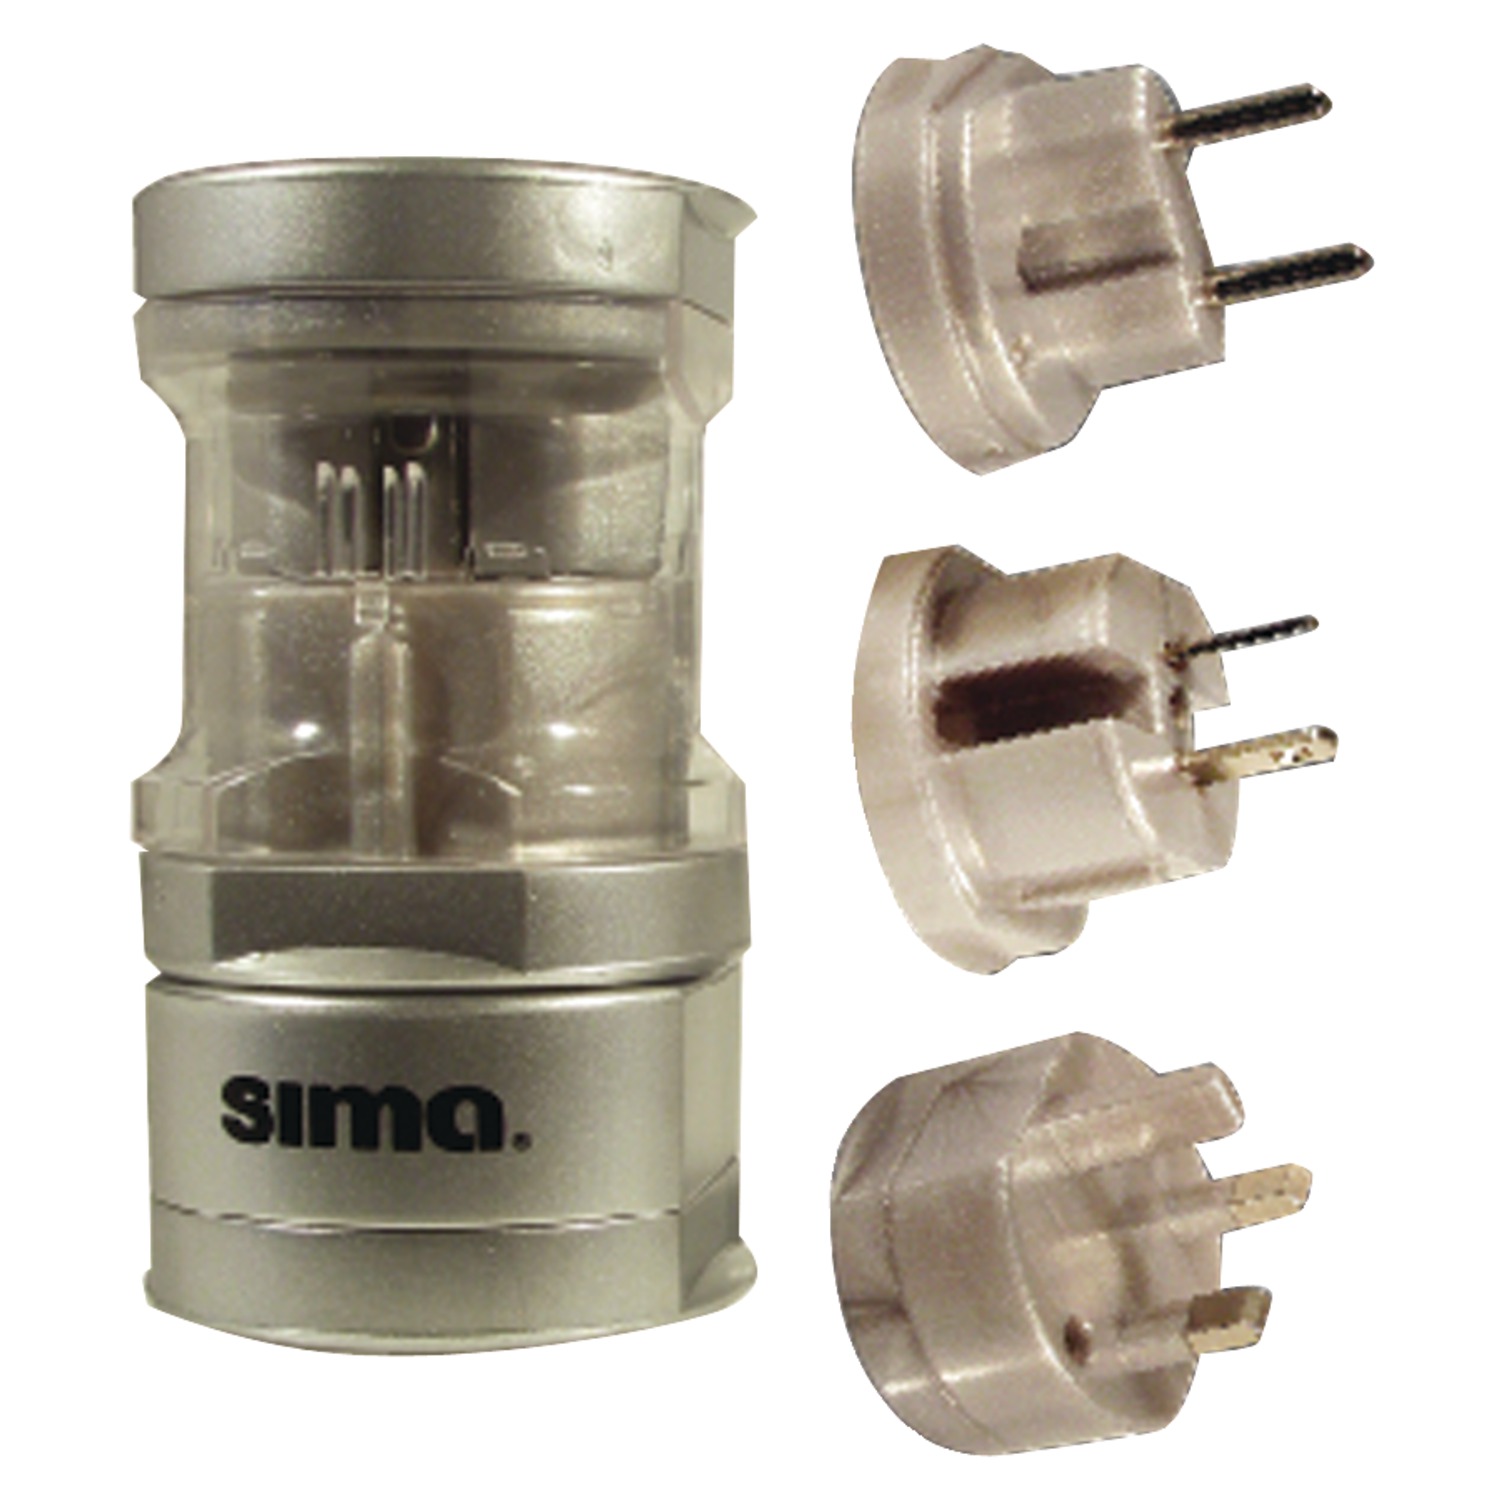 Sima® Sip-3 Sip-3 International Compact Travel Plug Set - image 1 of 2